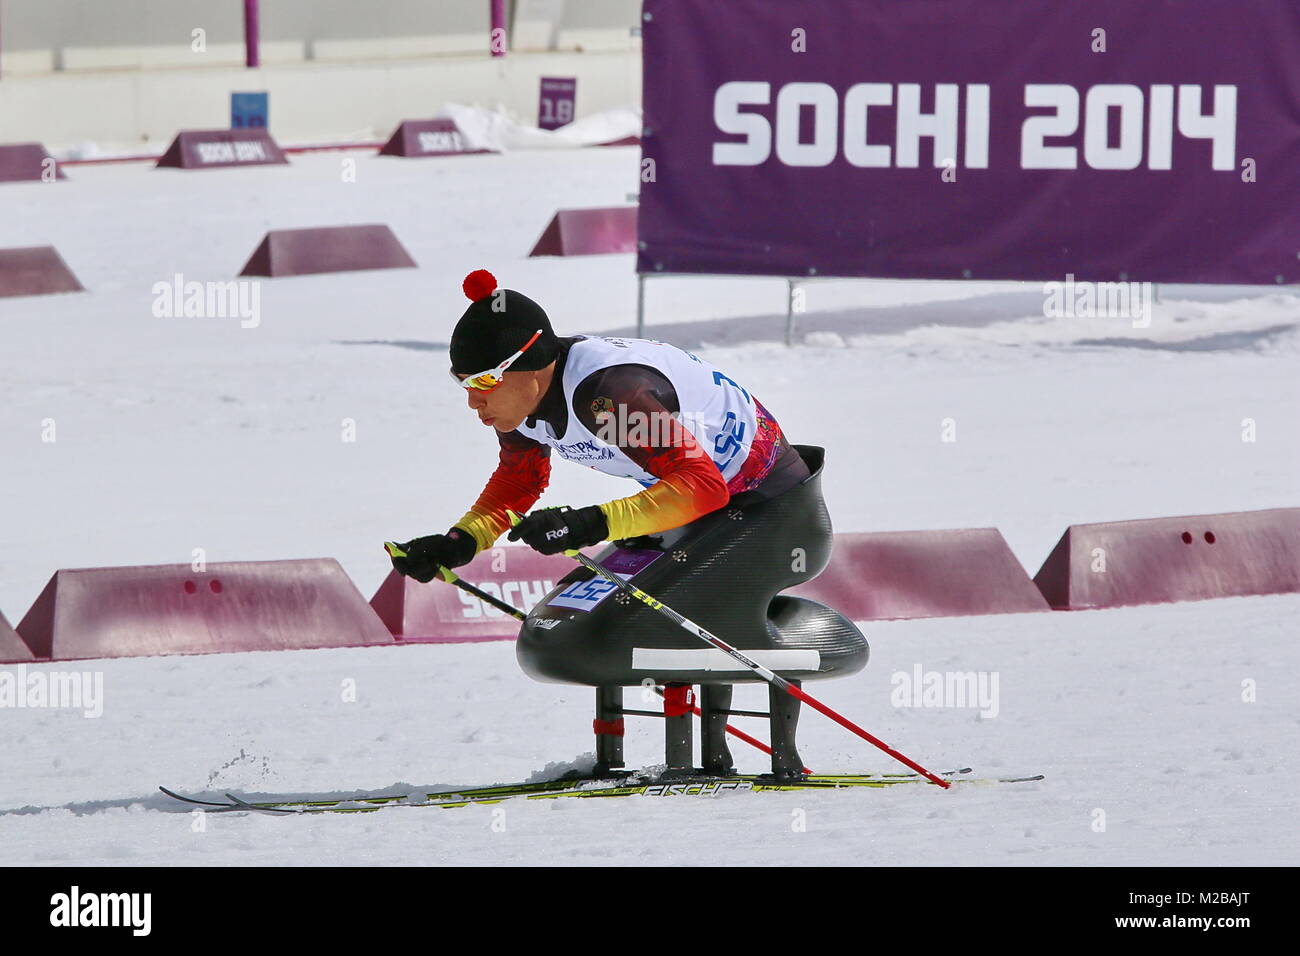 Auf dem Weg zur zweiten Goldmedaille : Andrea Eskau im Sitzskirennen über fünf kilomètre bei den Paralympics 2014 à Sotschi/Russland Banque D'Images